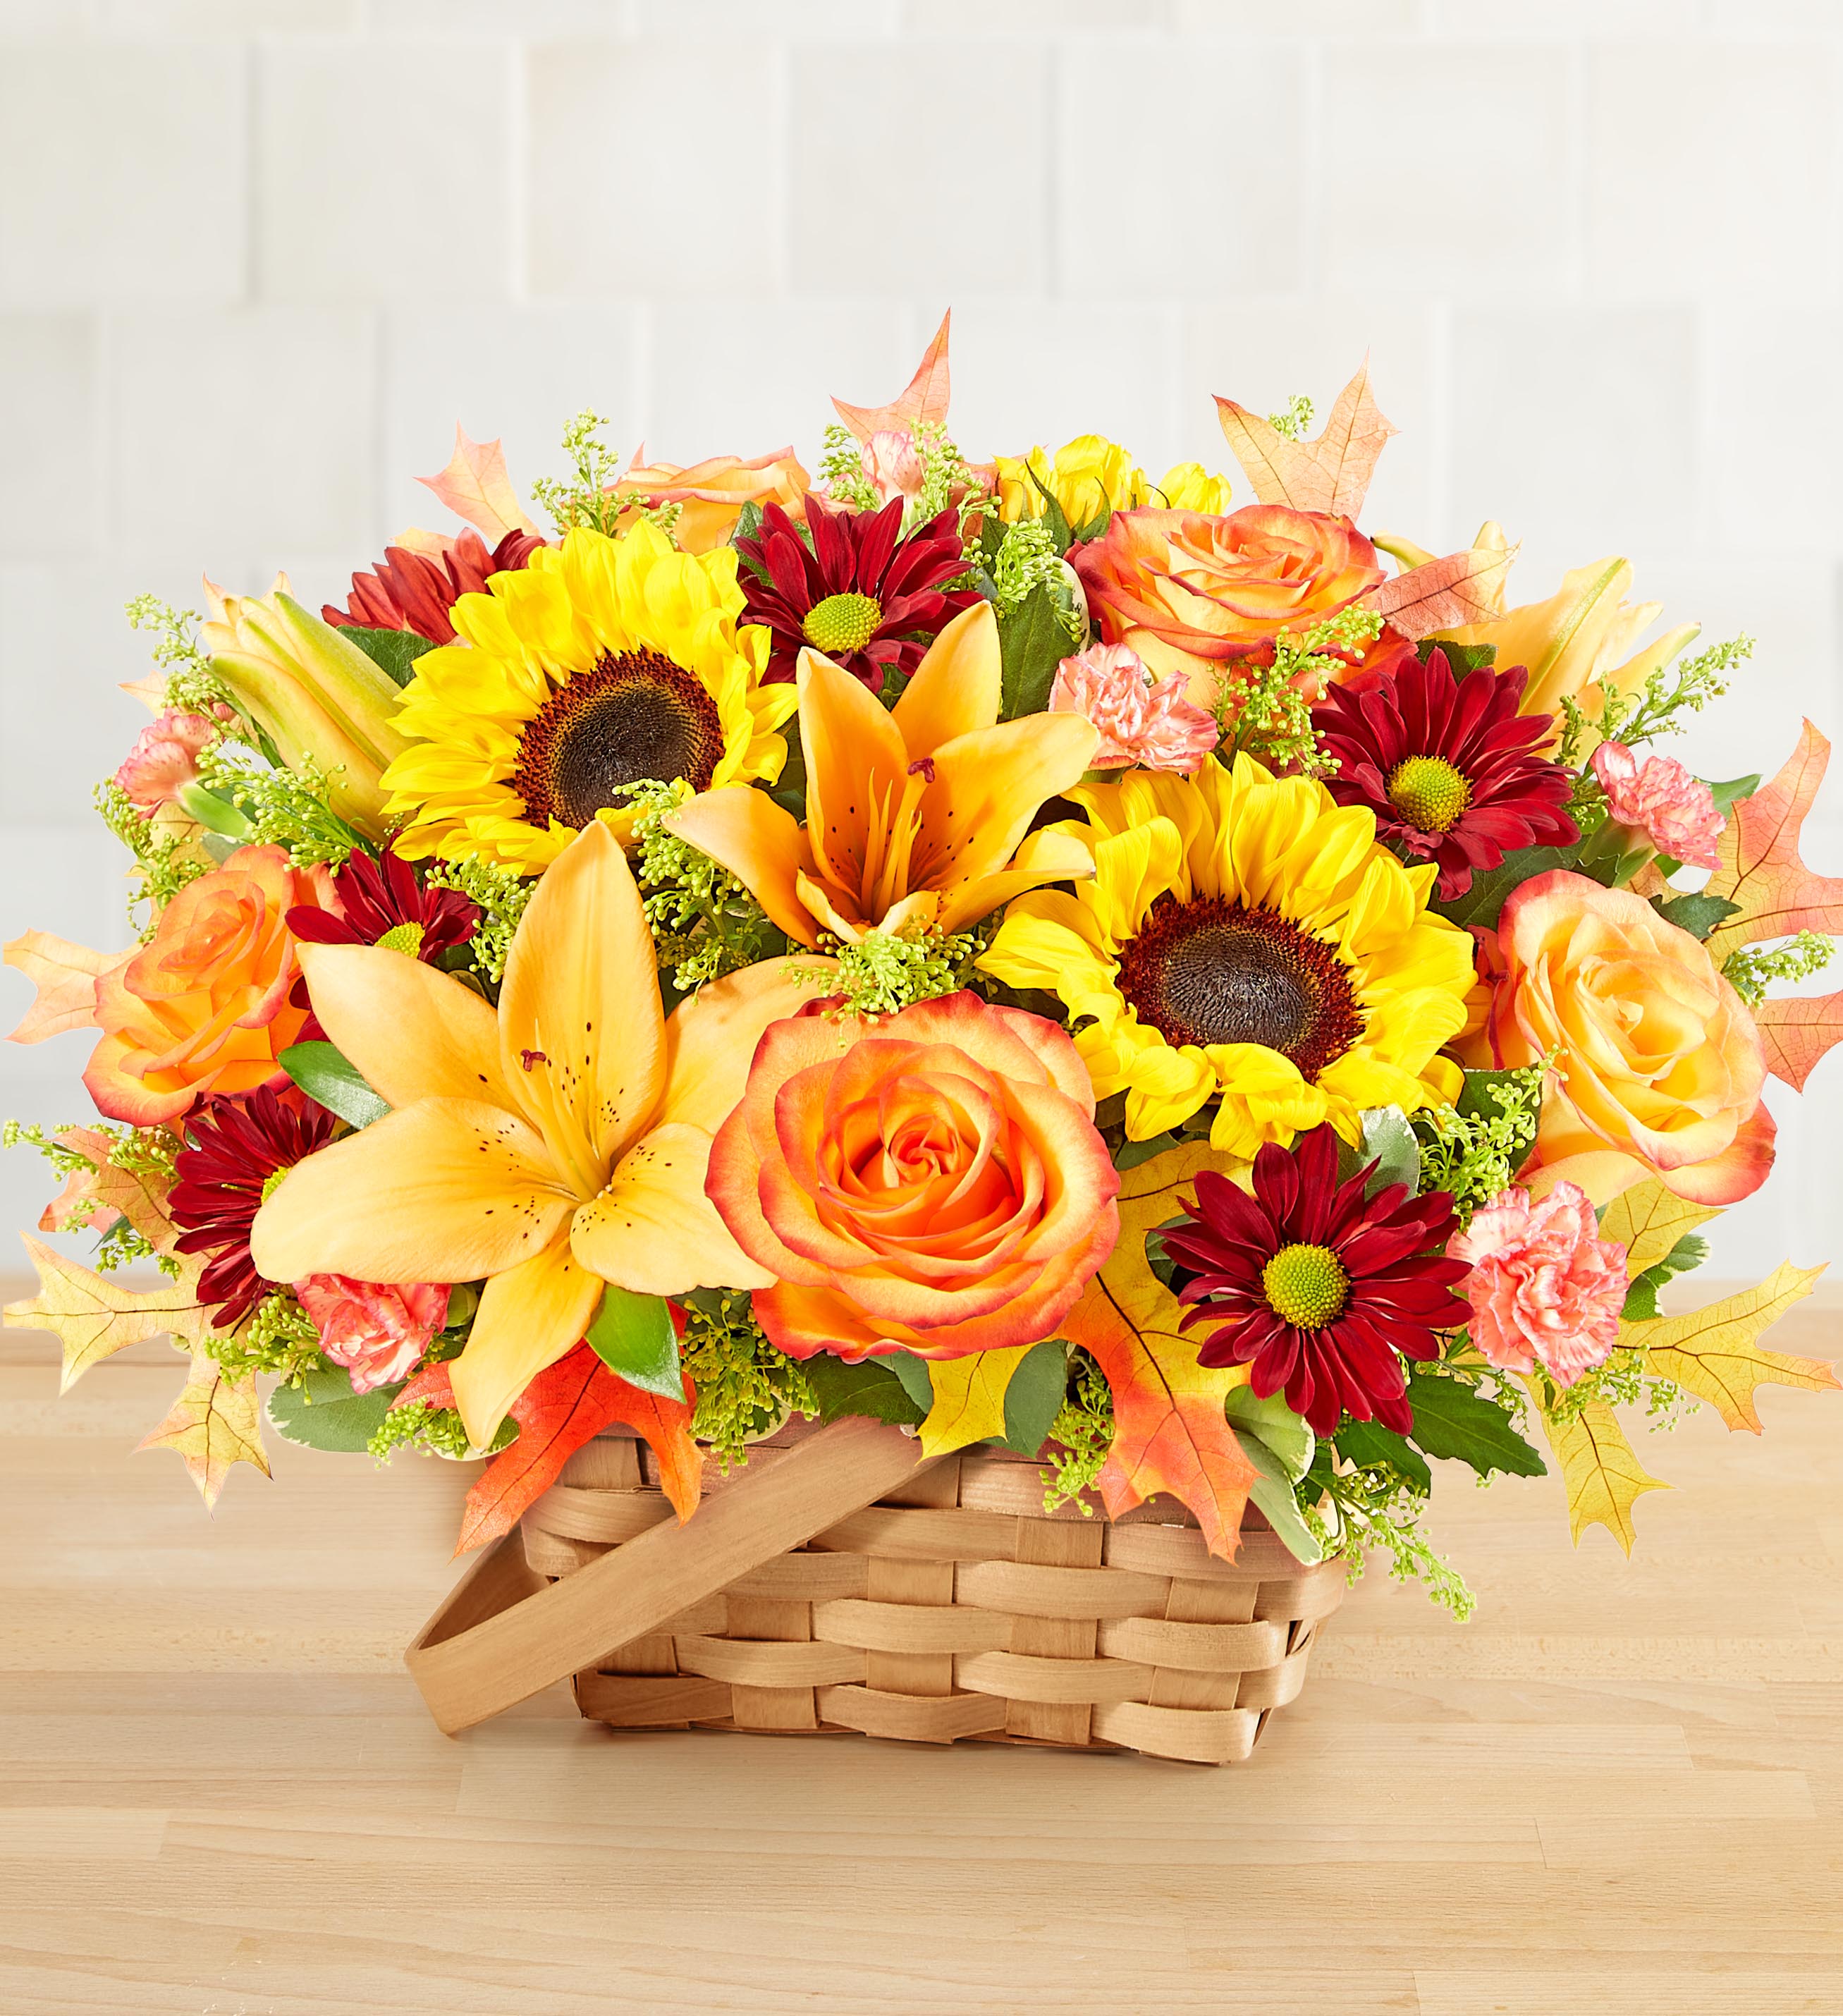 Sympathy Arrangement In Basket (Large) - Multicolor Bright Mixed Flowers